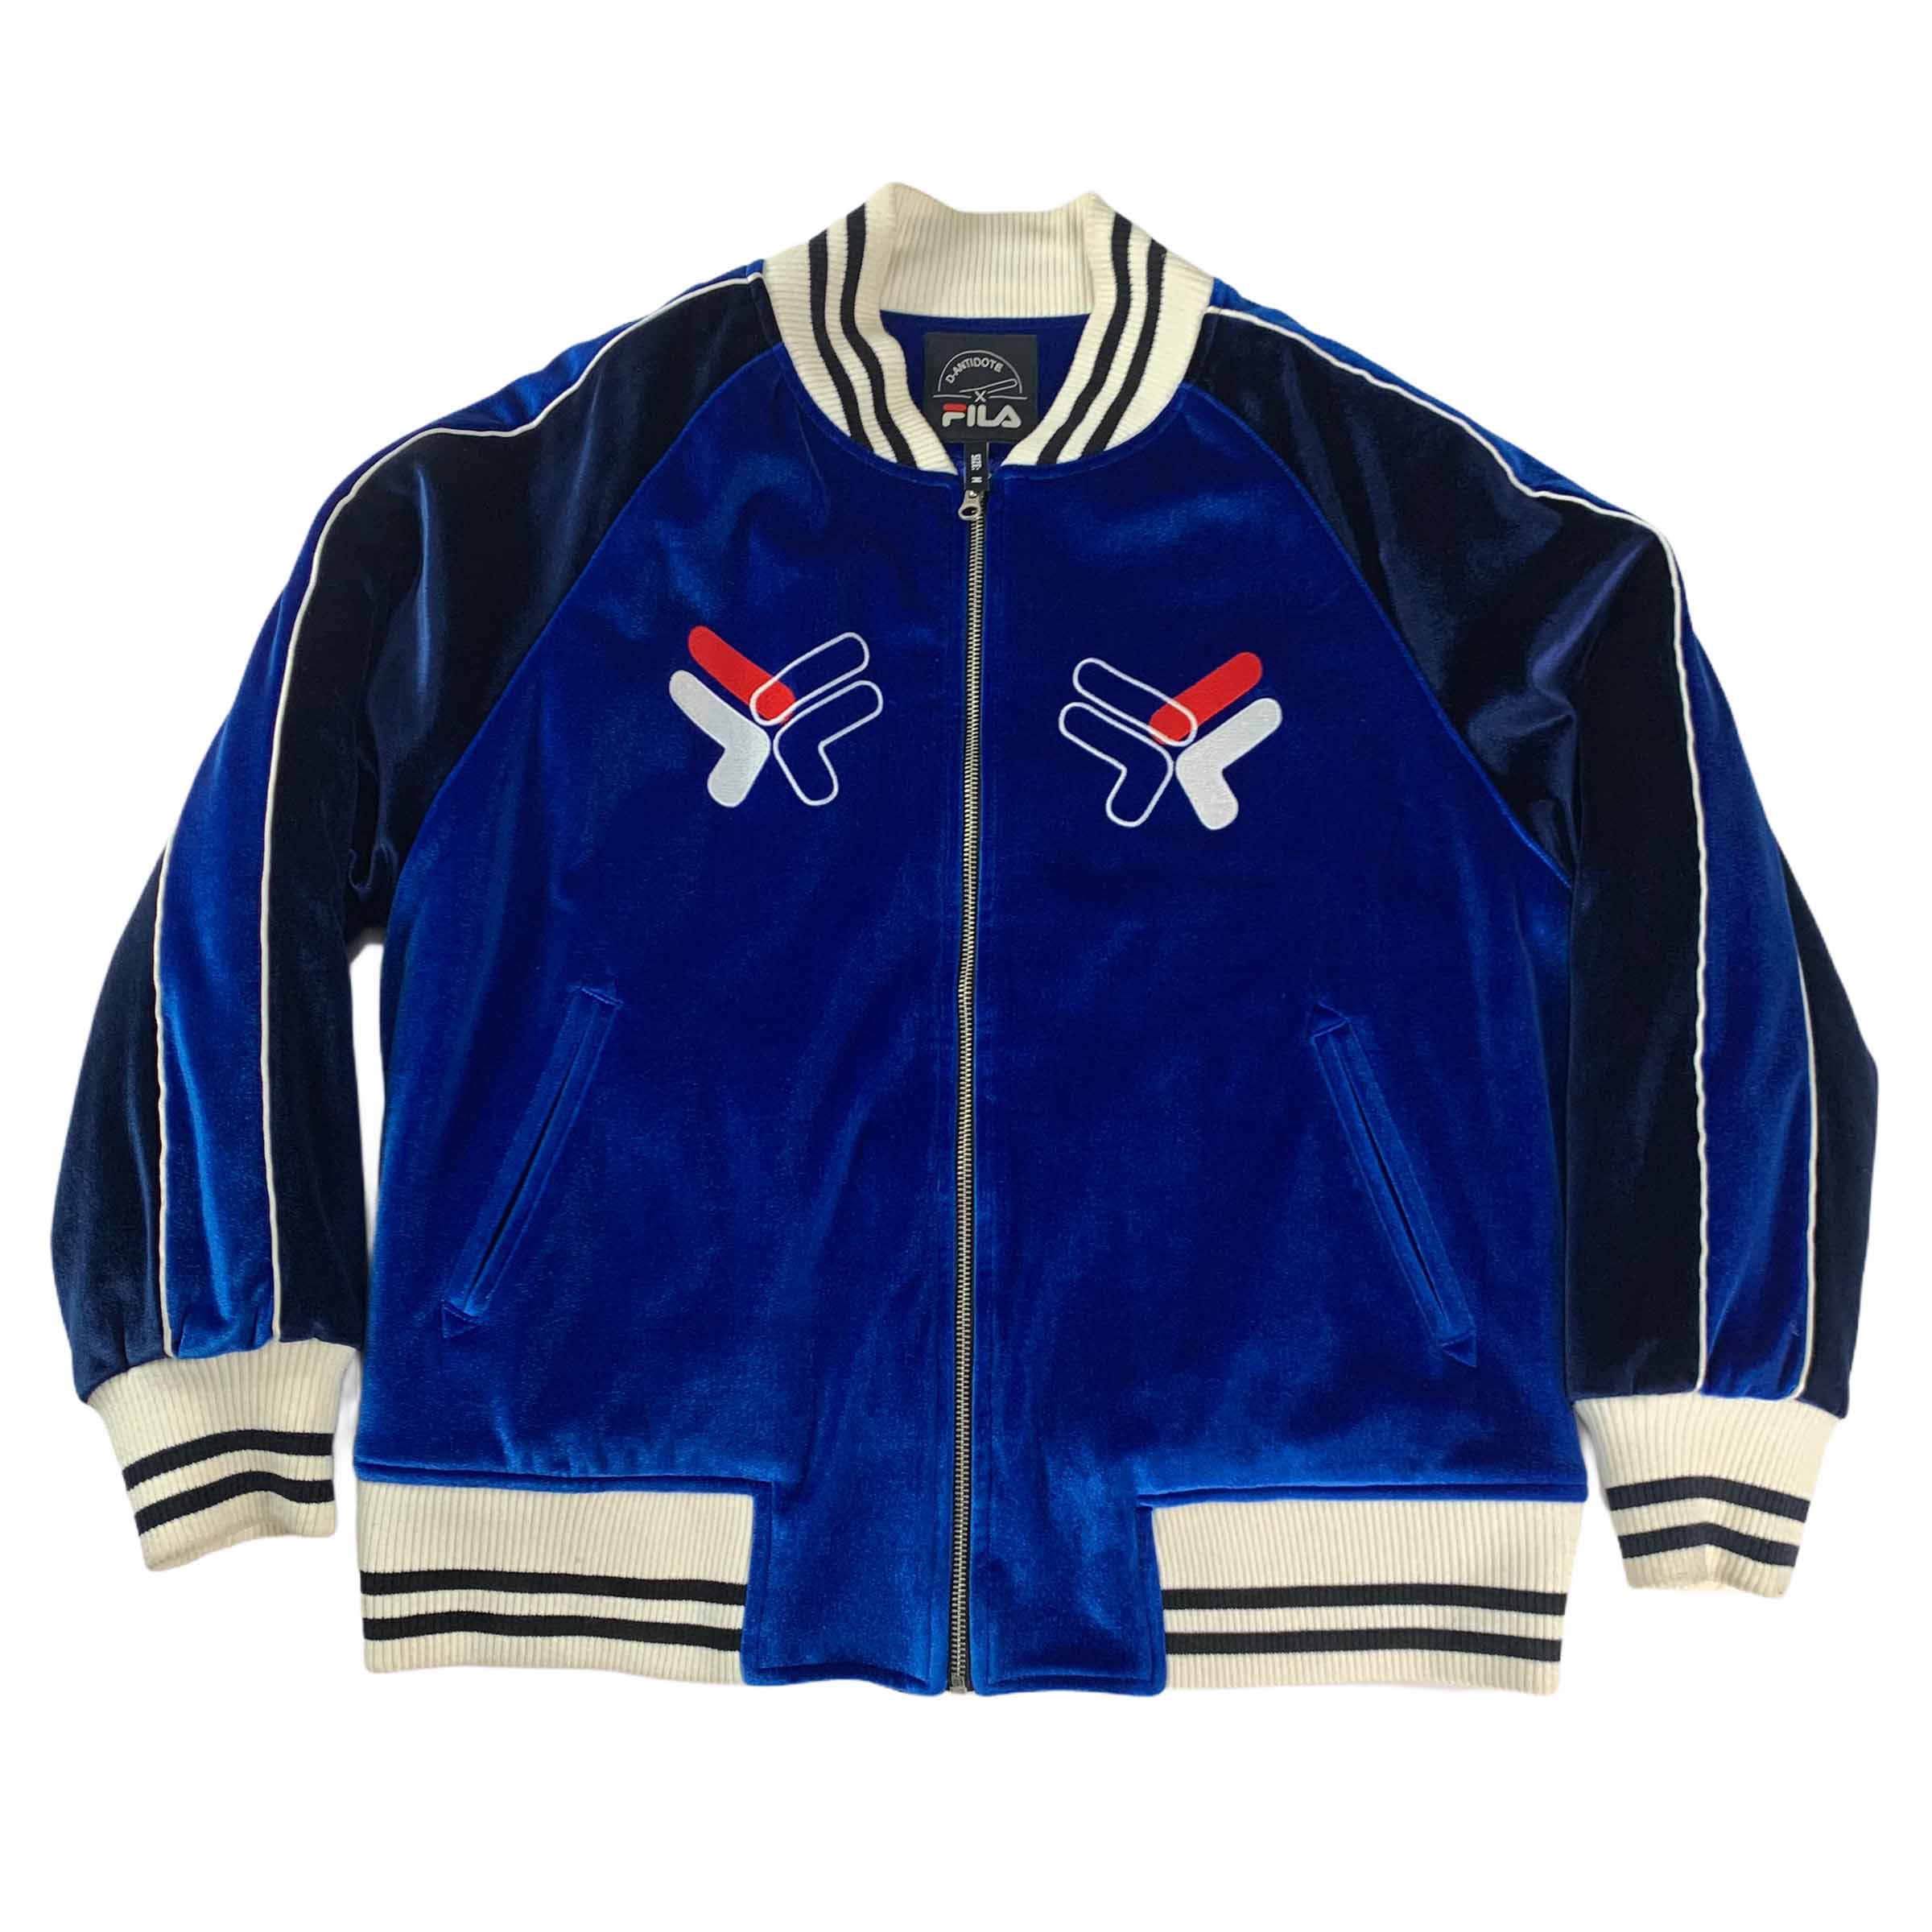 [D-Antidote x Fila] Logo Velvet Stadium Jacket Blue/Navy - Size M